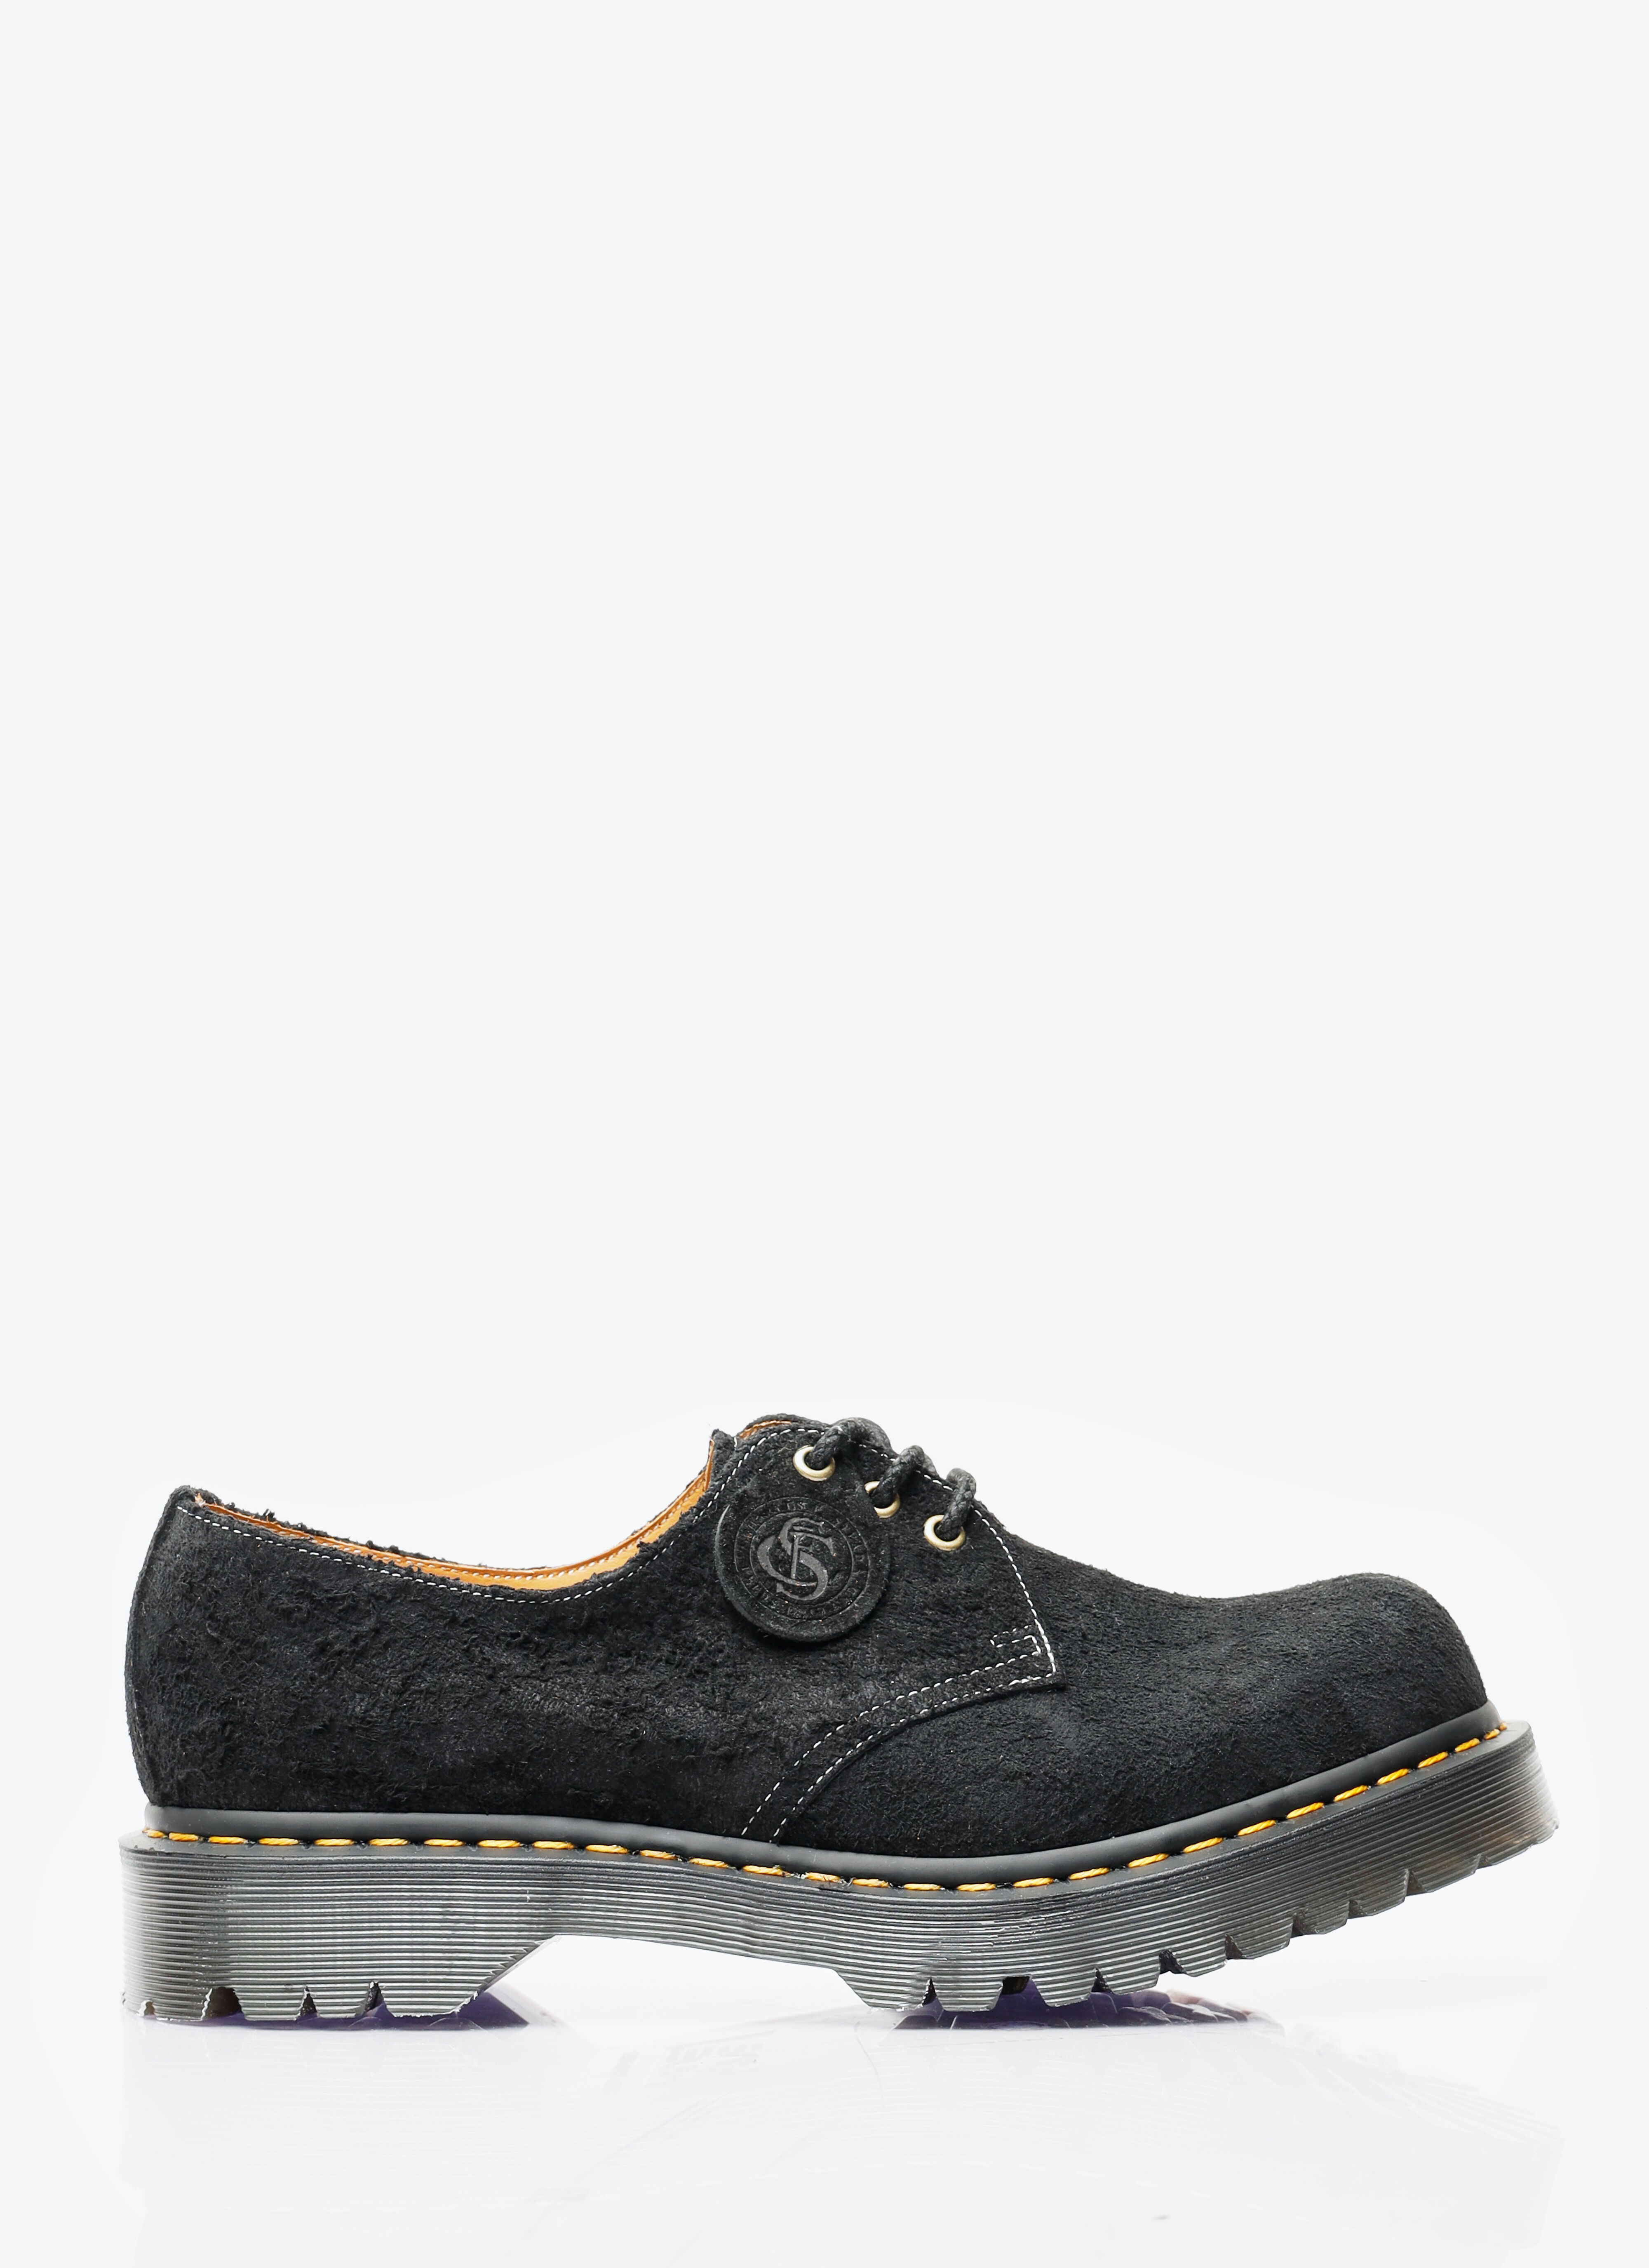 Rick Owens x Dr. Martens 1461 Bex Grand Canyon Suede Lace-Up Shoes Black rod0156002